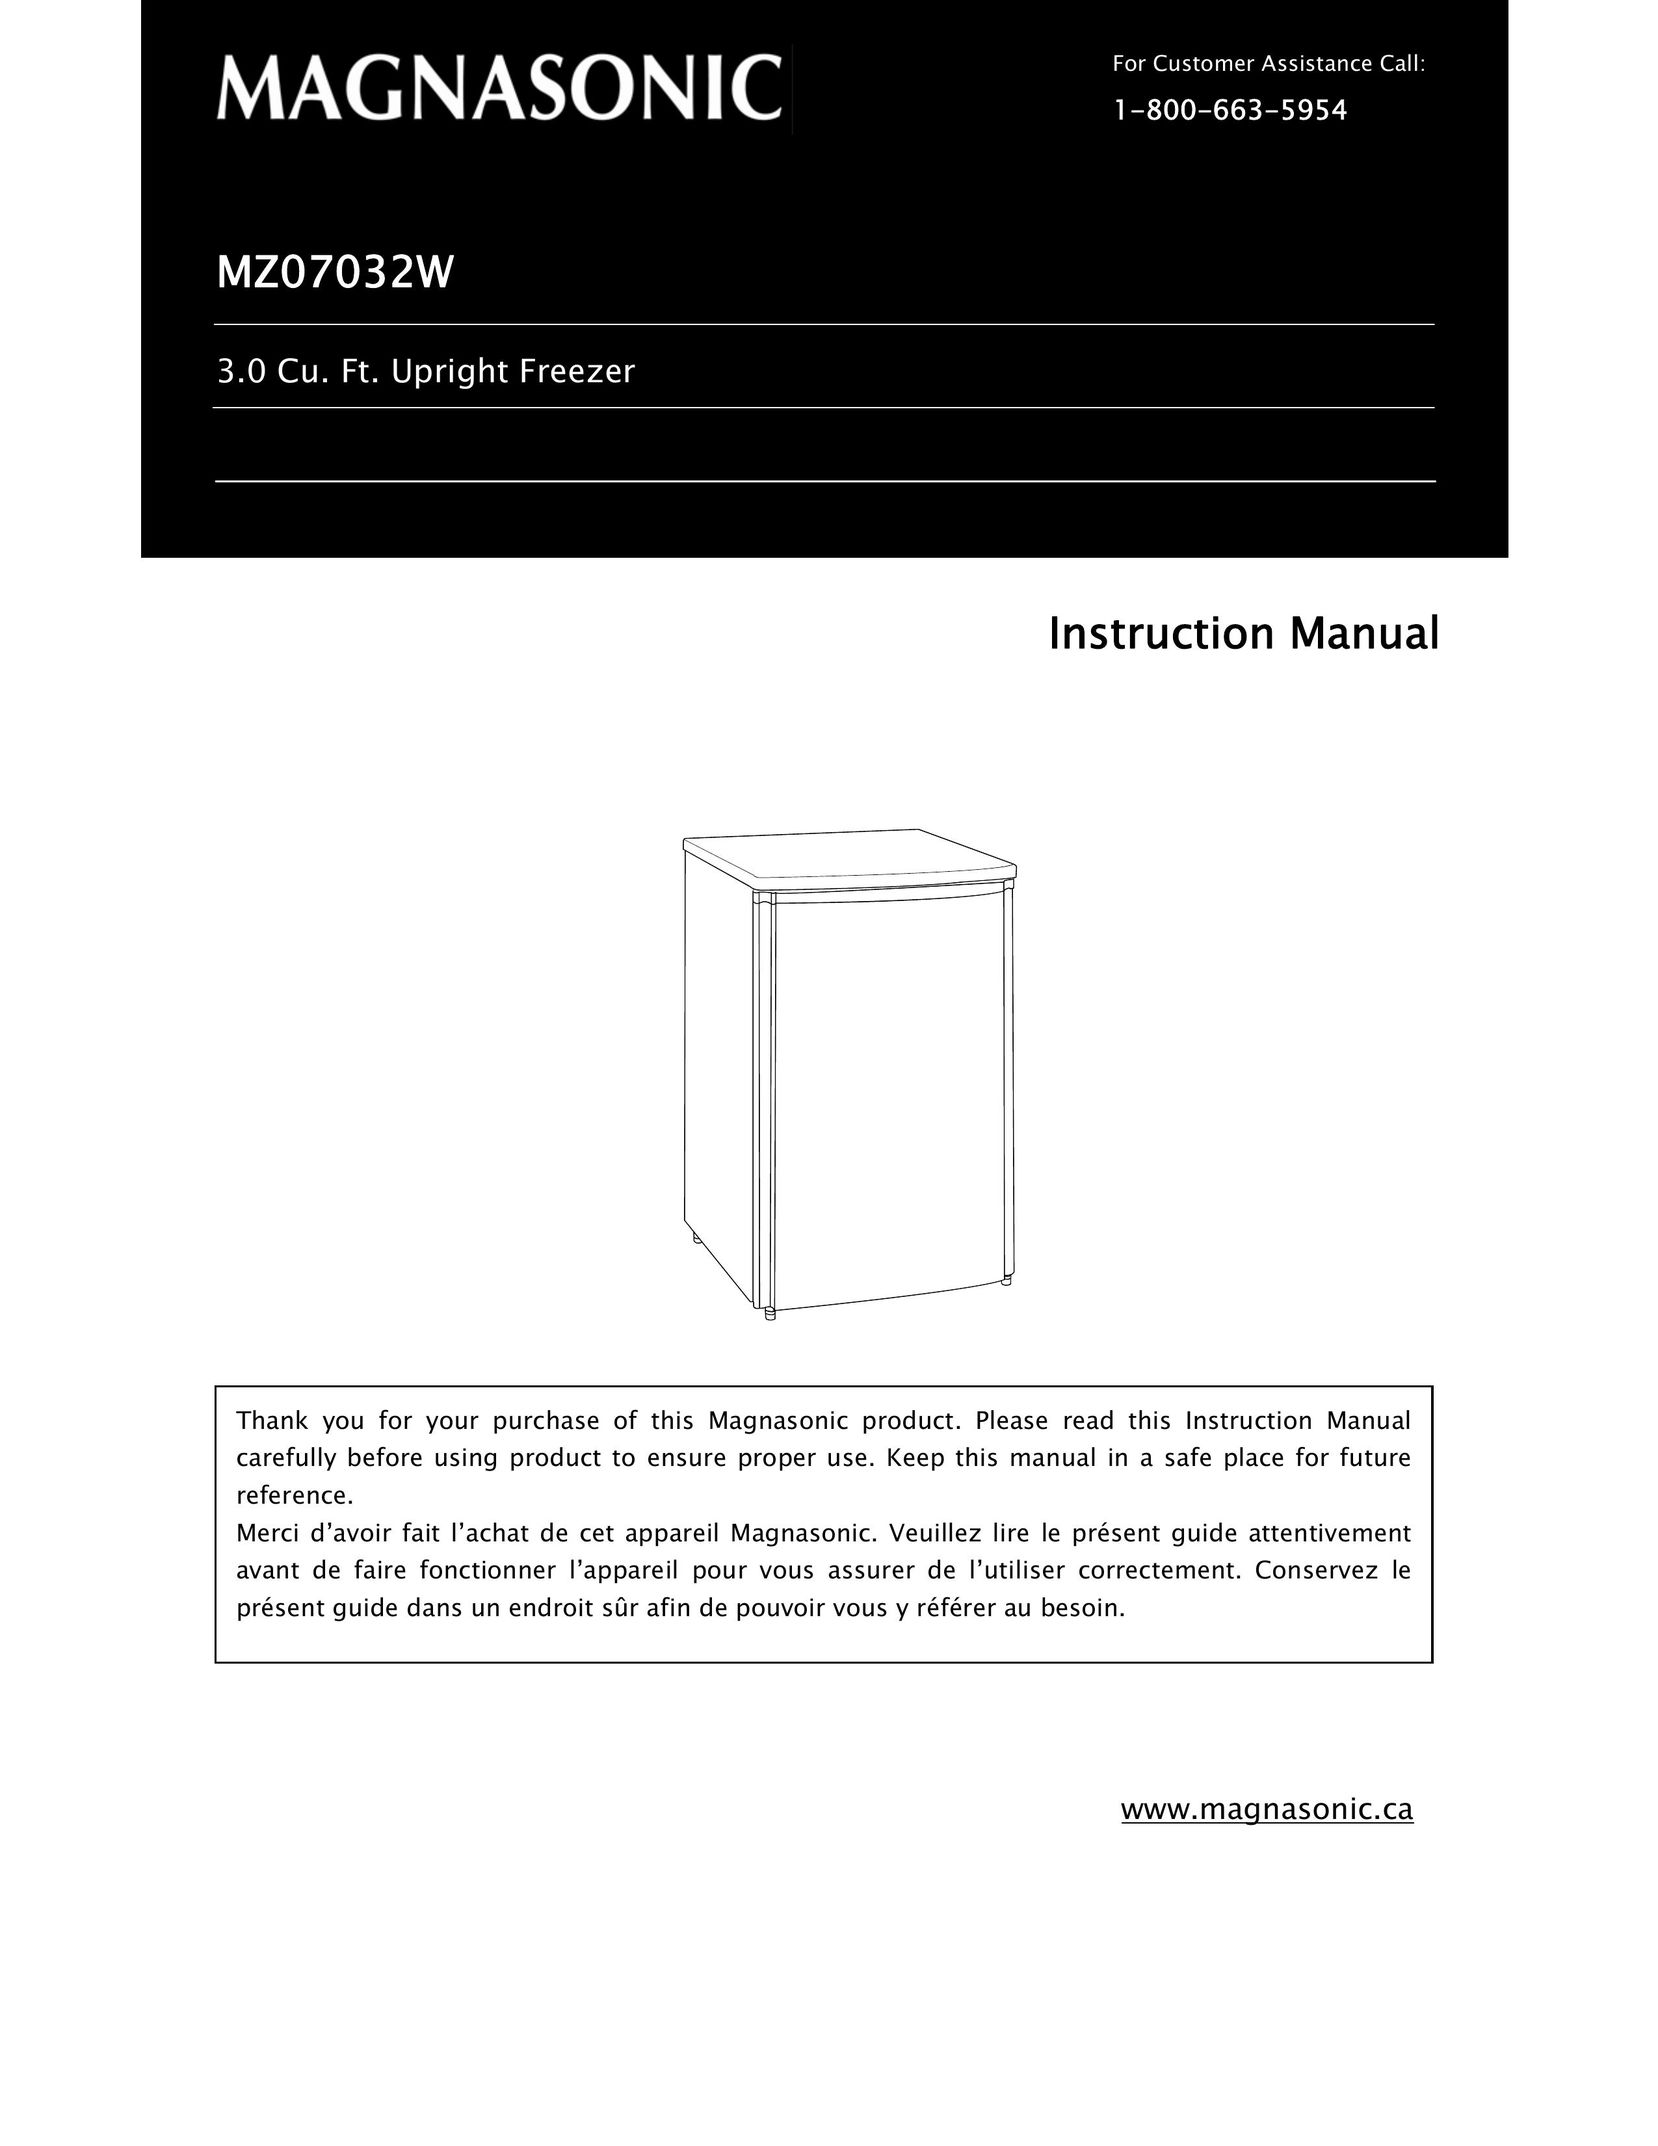 Magnasonic MZ07032W Freezer User Manual